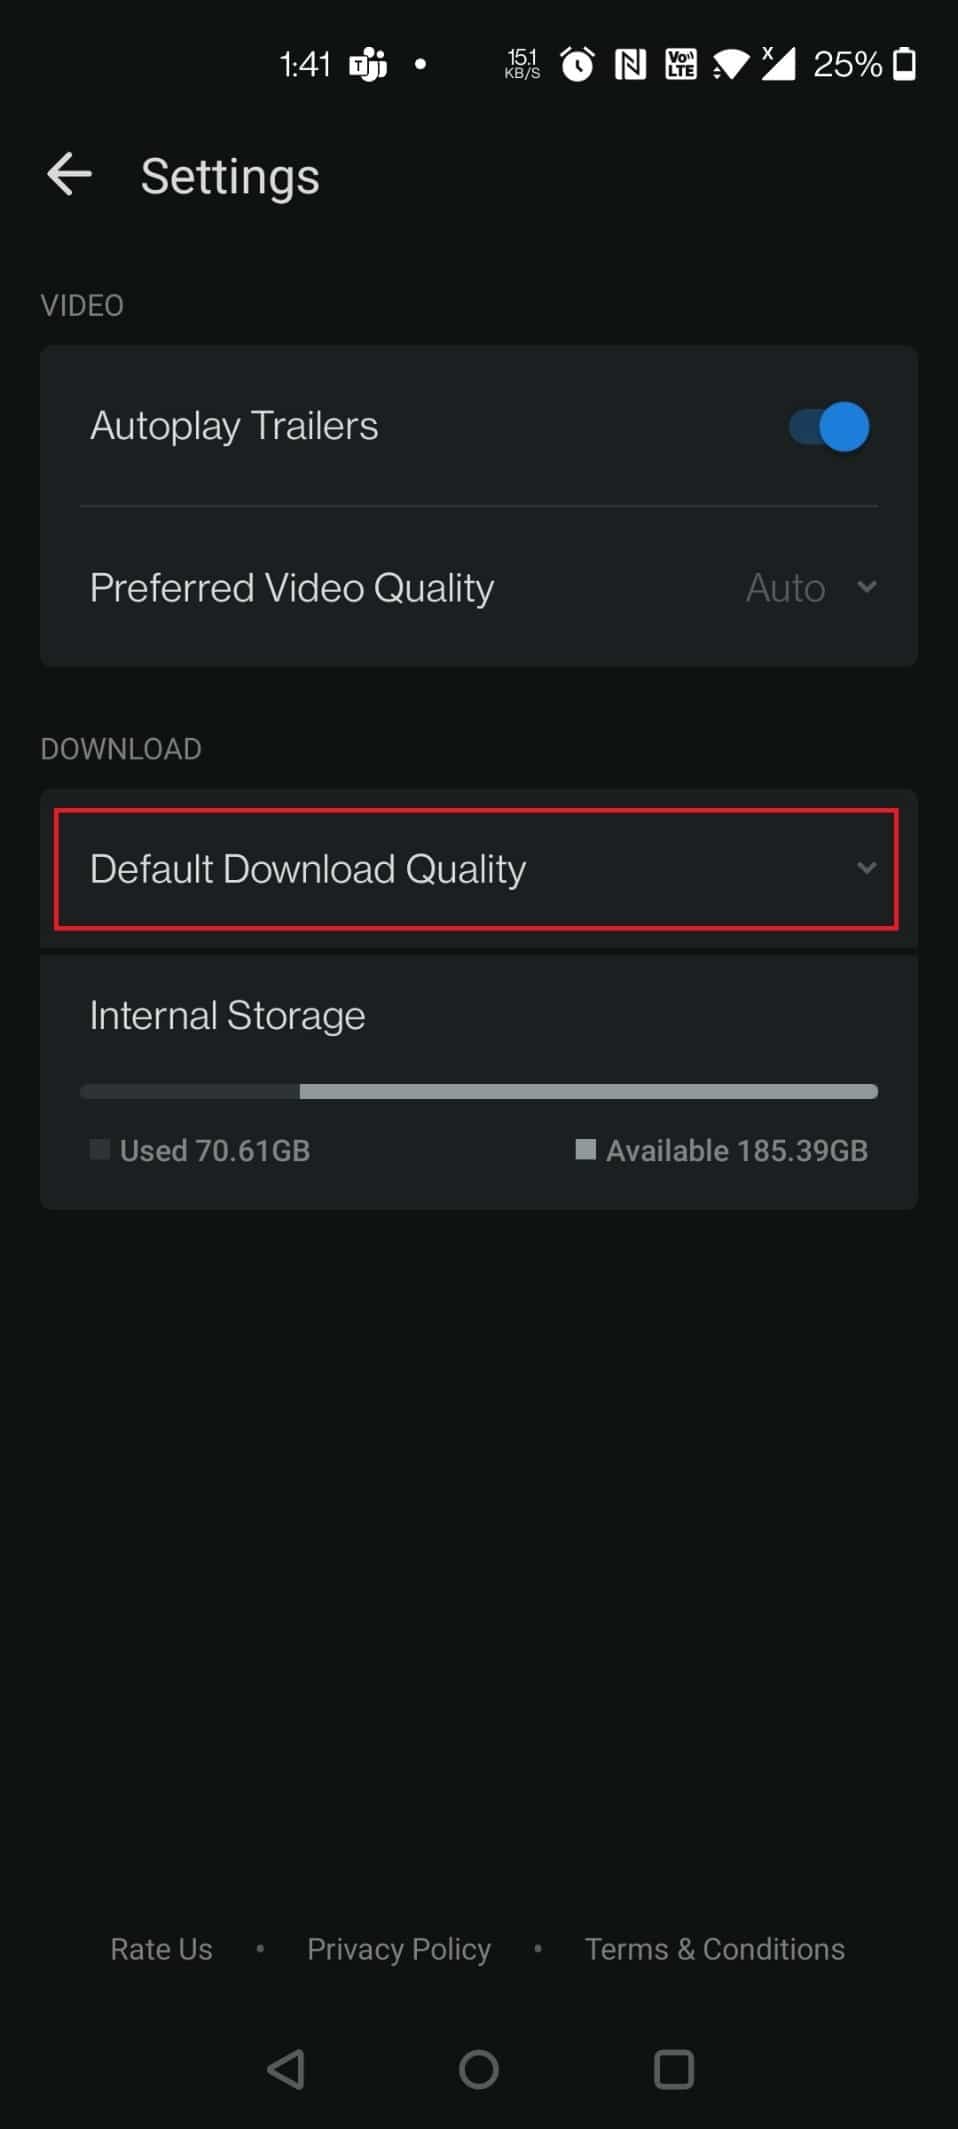 tap on Default Download Quality. Fix Disney Plus Not Loading